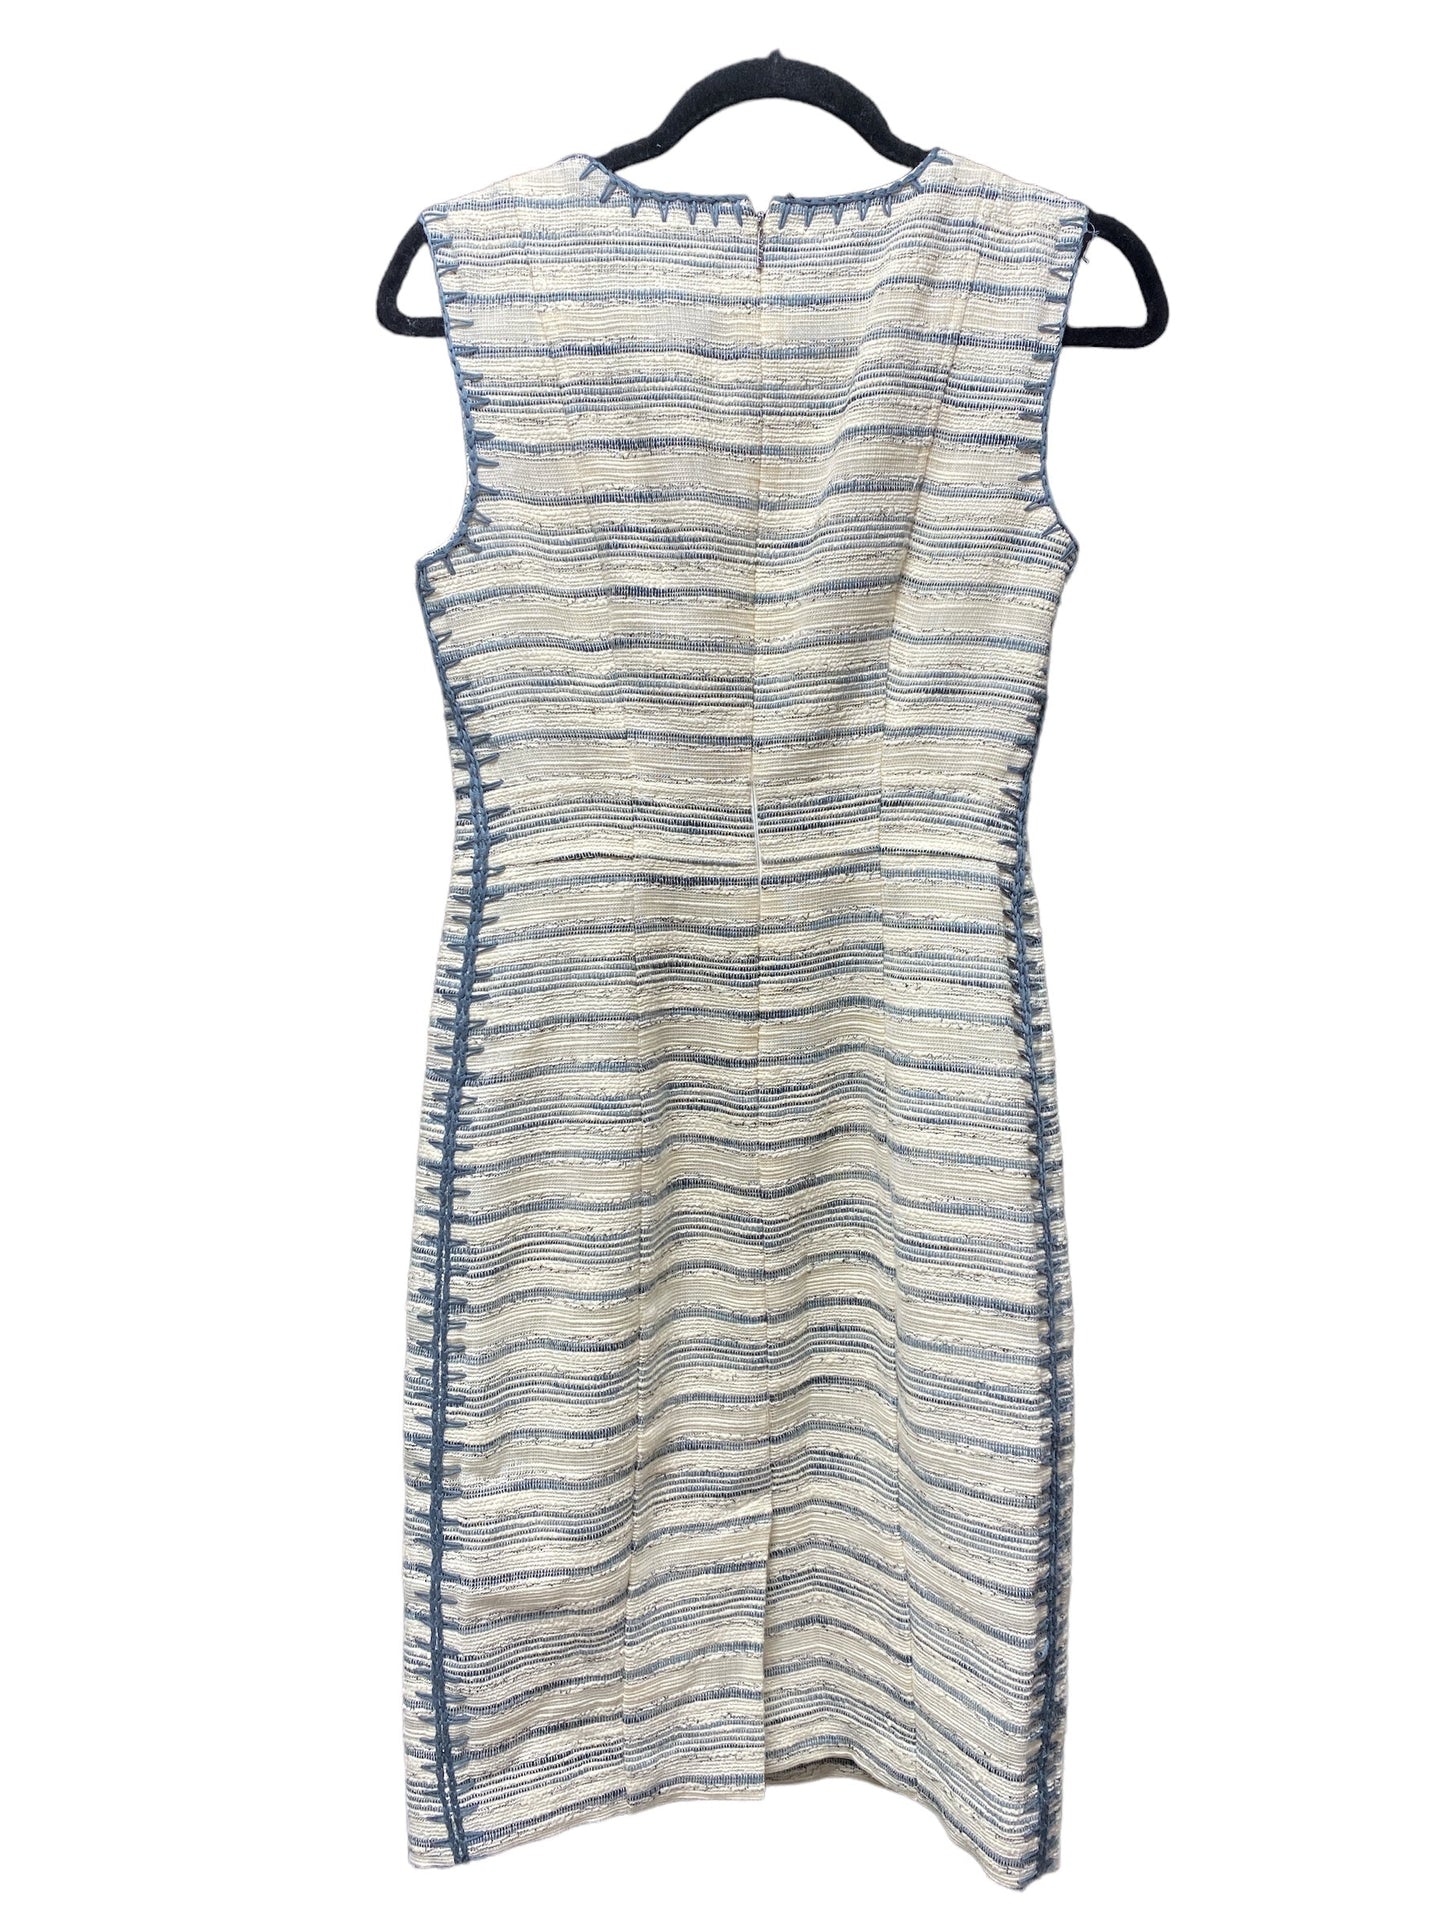 Striped Pattern Dress Designer Tory Burch, Size 2